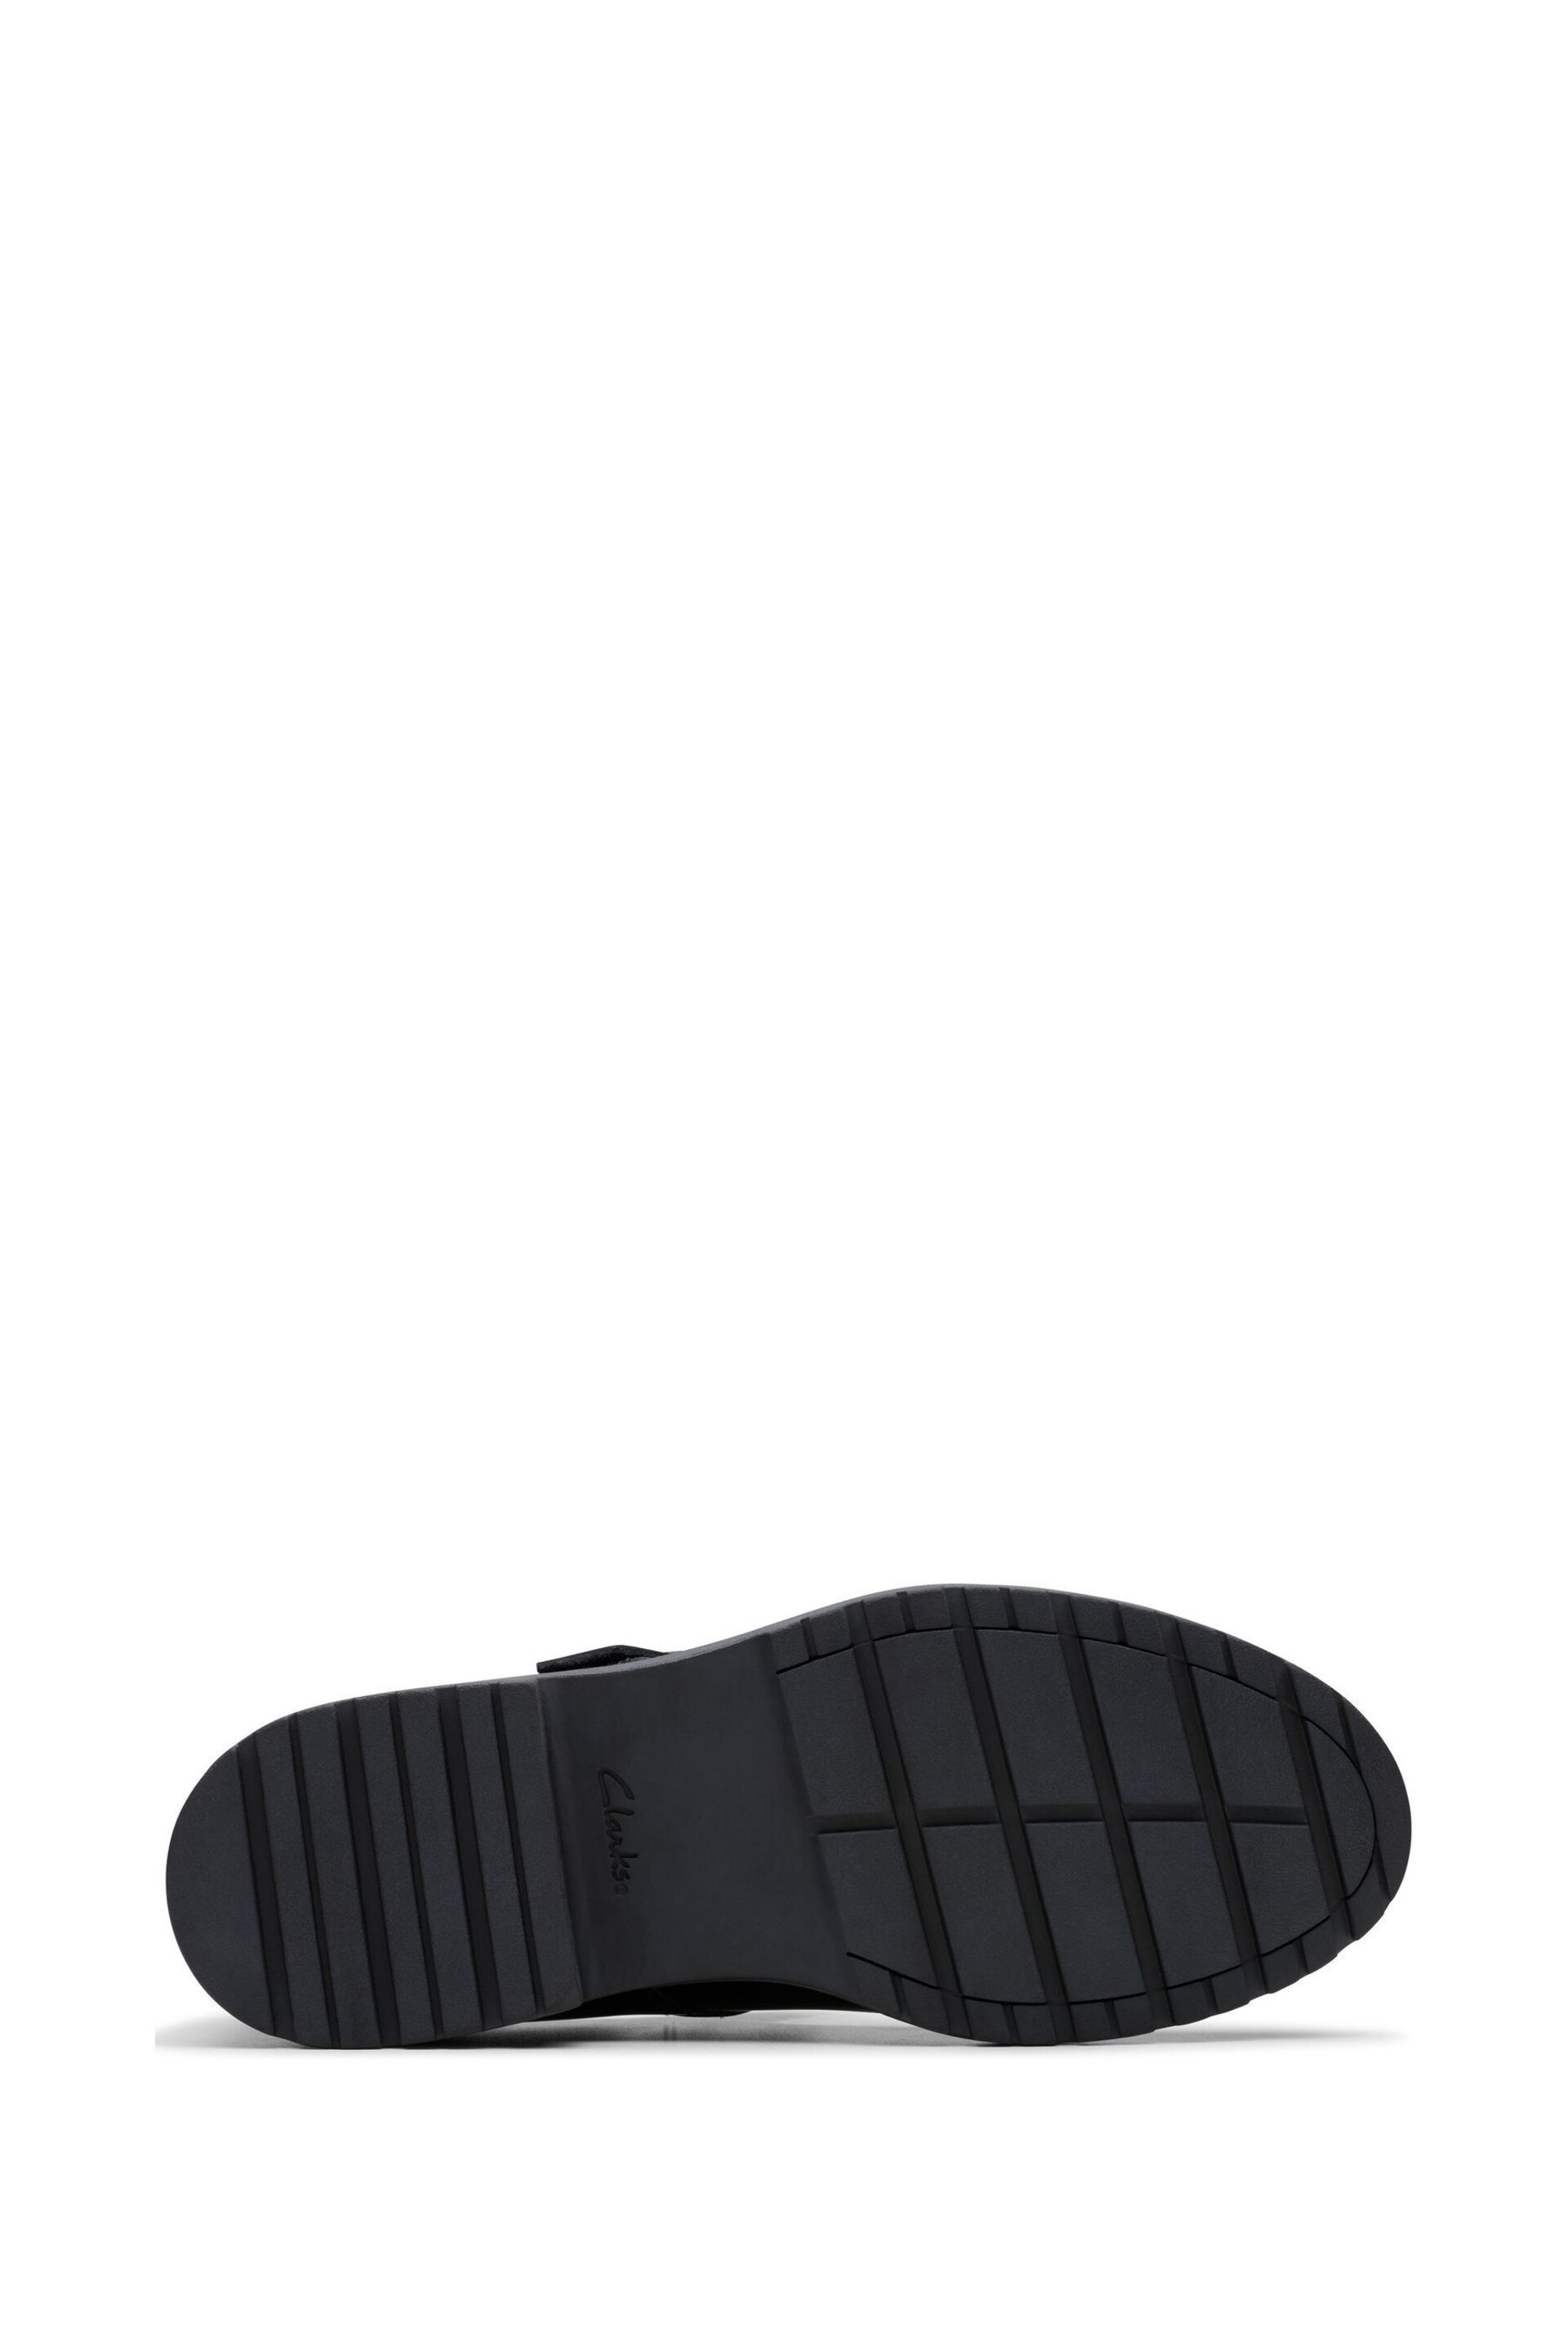 Clarks Black Pat Loxham Bar Y Shoes - Image 3 of 8